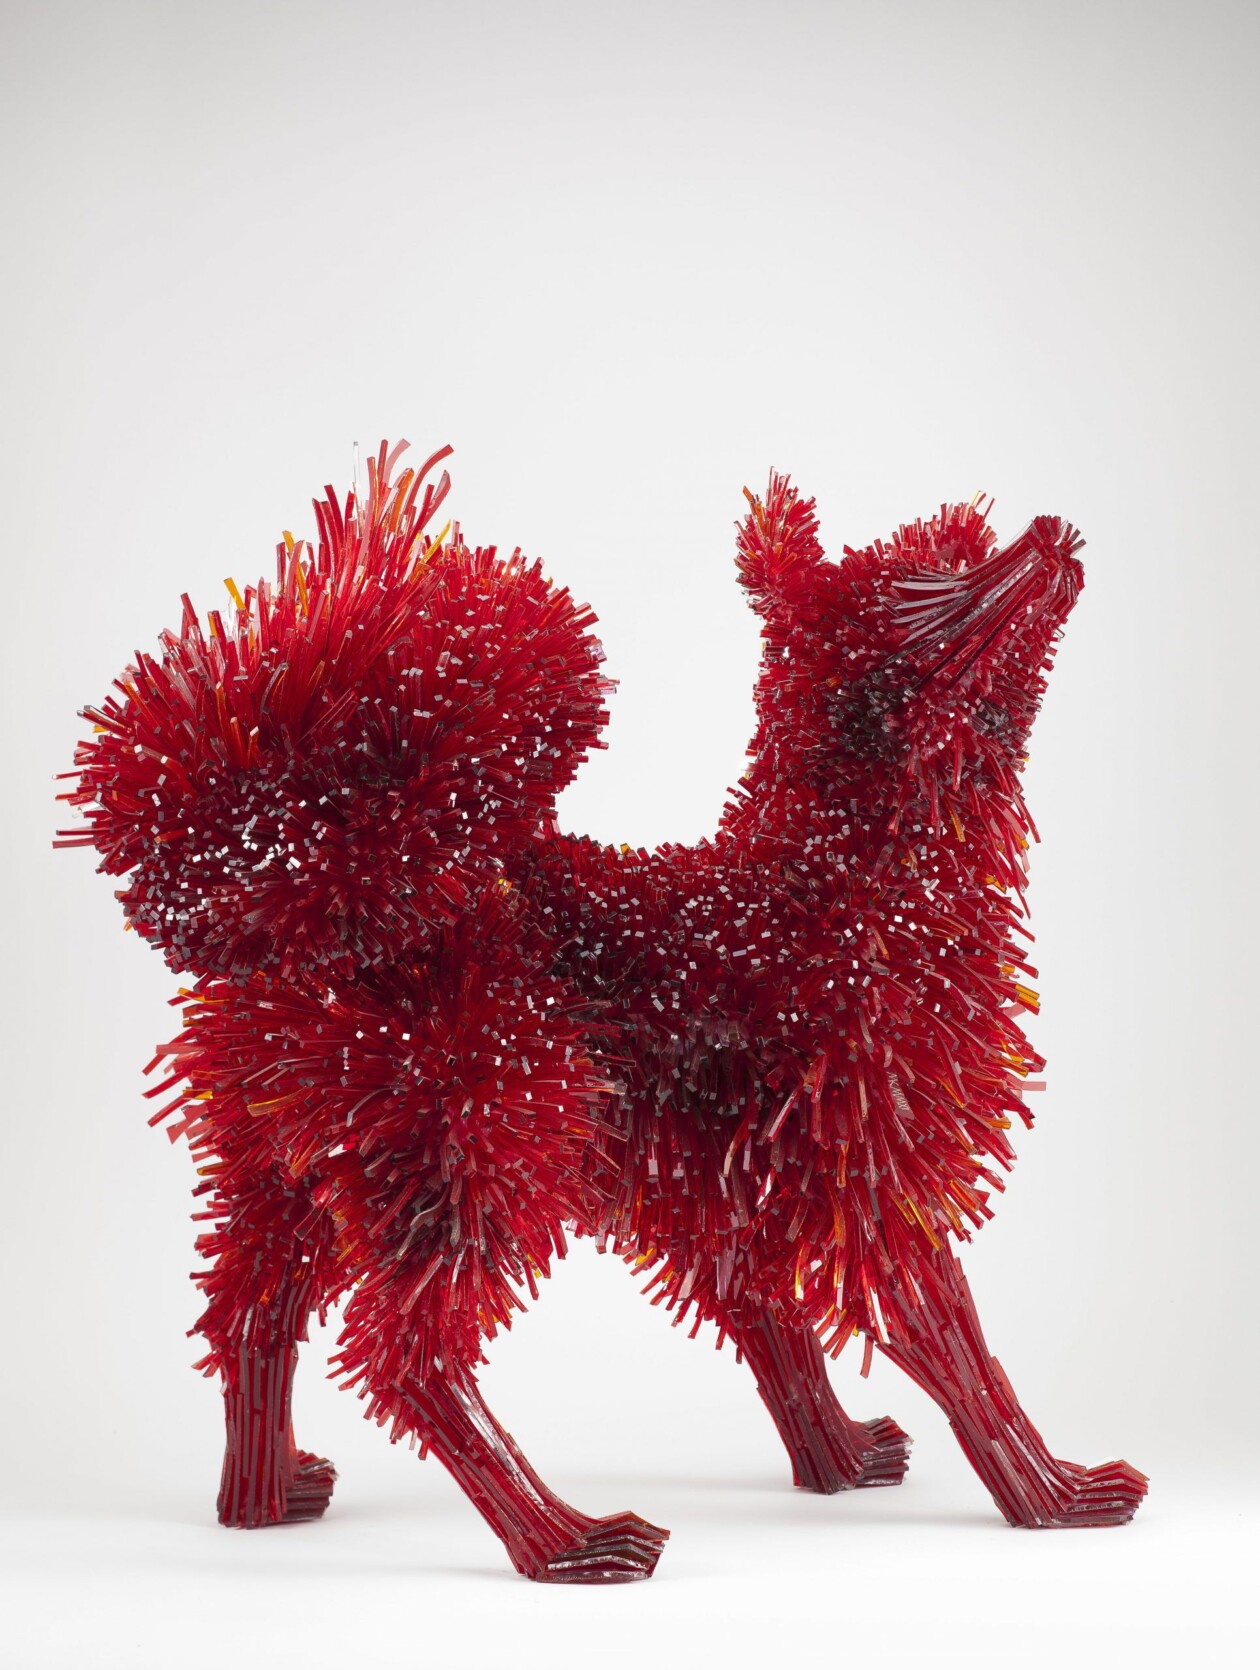 Shattered Glass Animal Sculptures By Polish Artist Marta Klonowska (18)